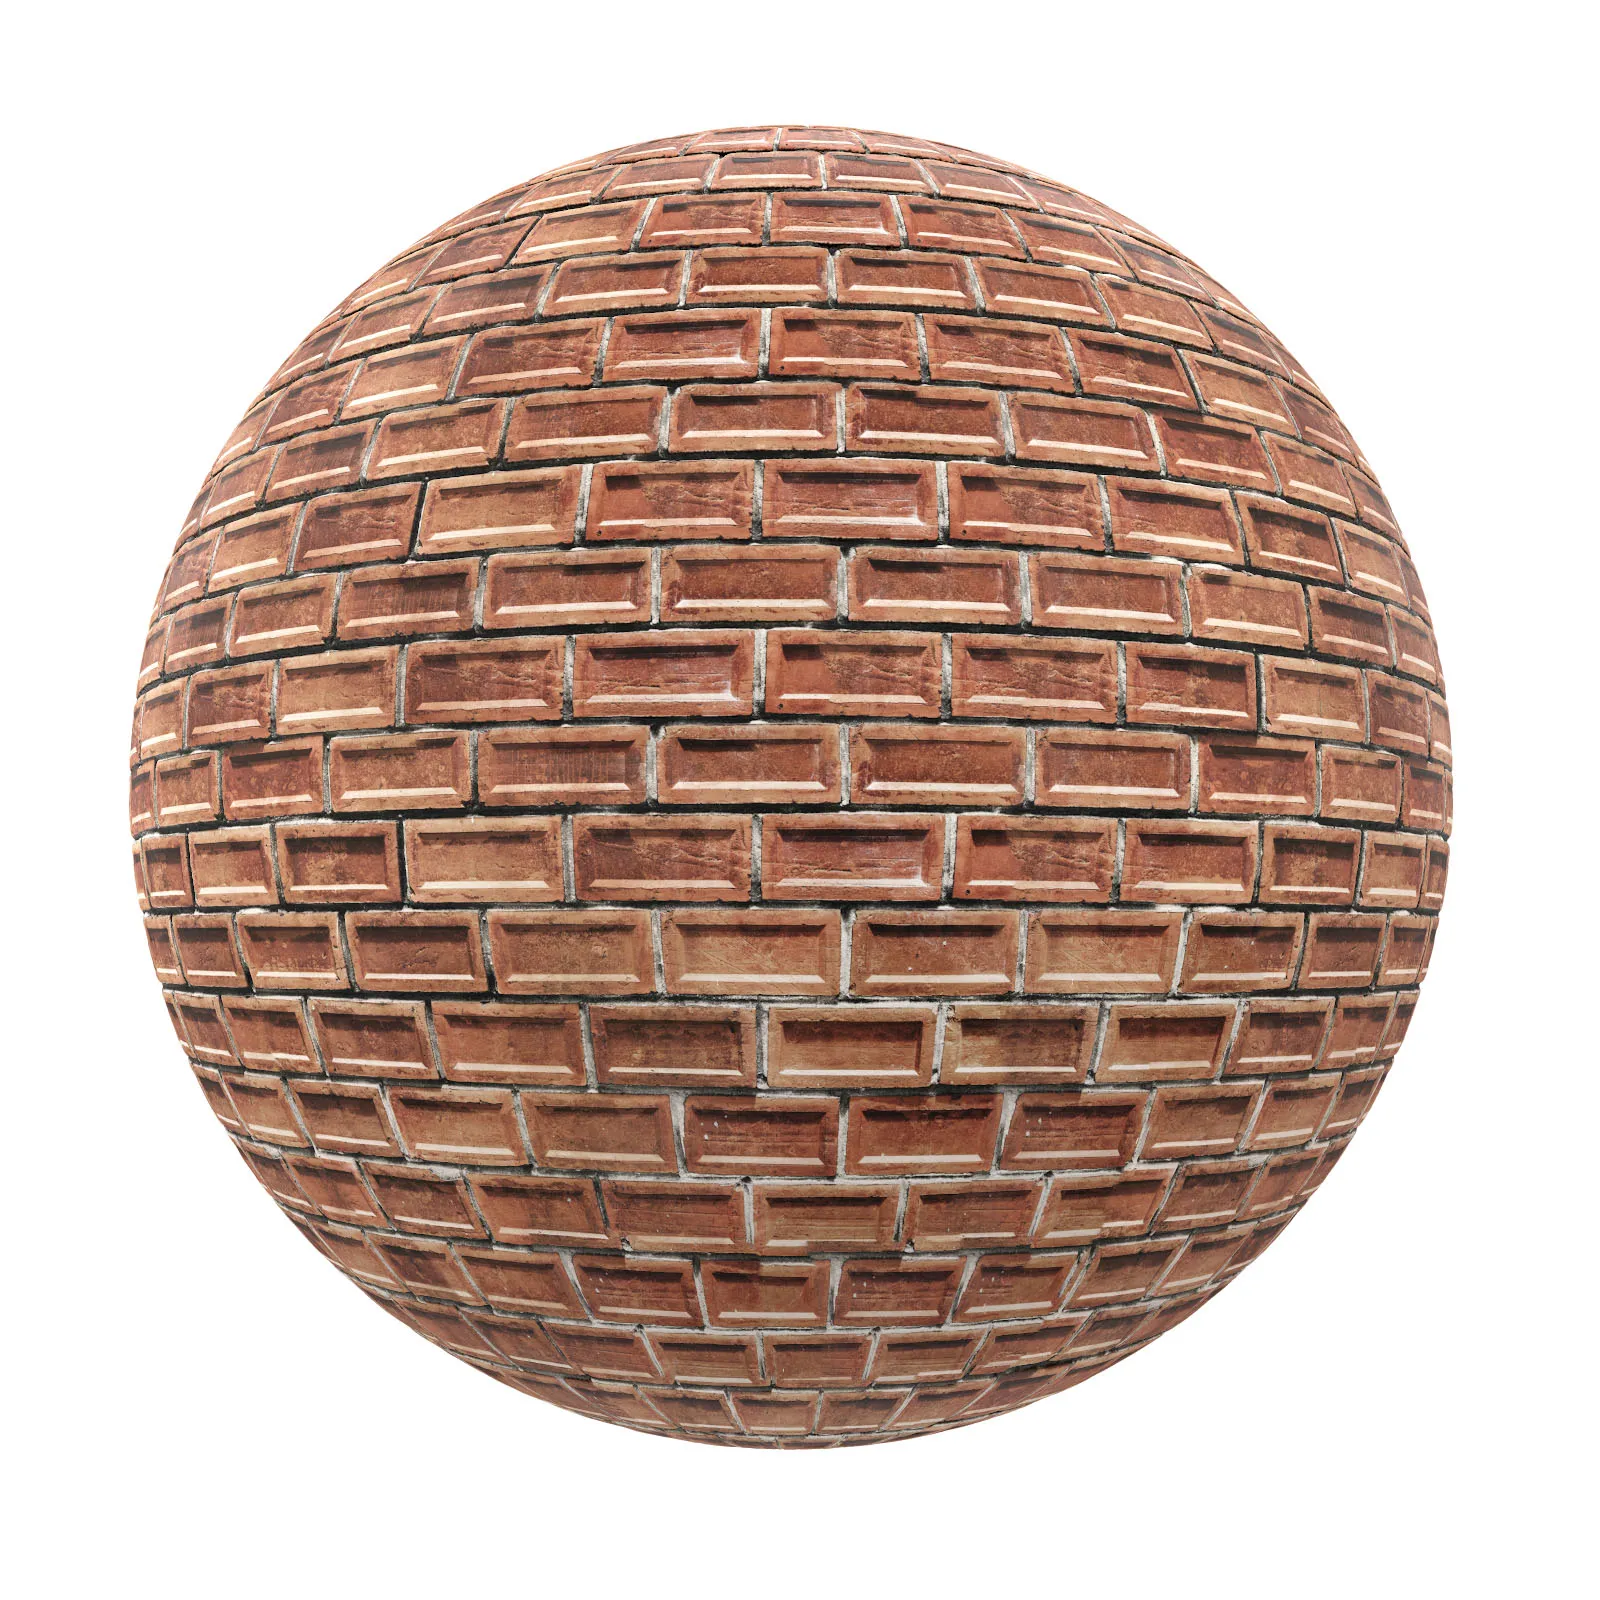 PBR CGAXIS TEXTURES – BRICK – Red Brick Wall 19